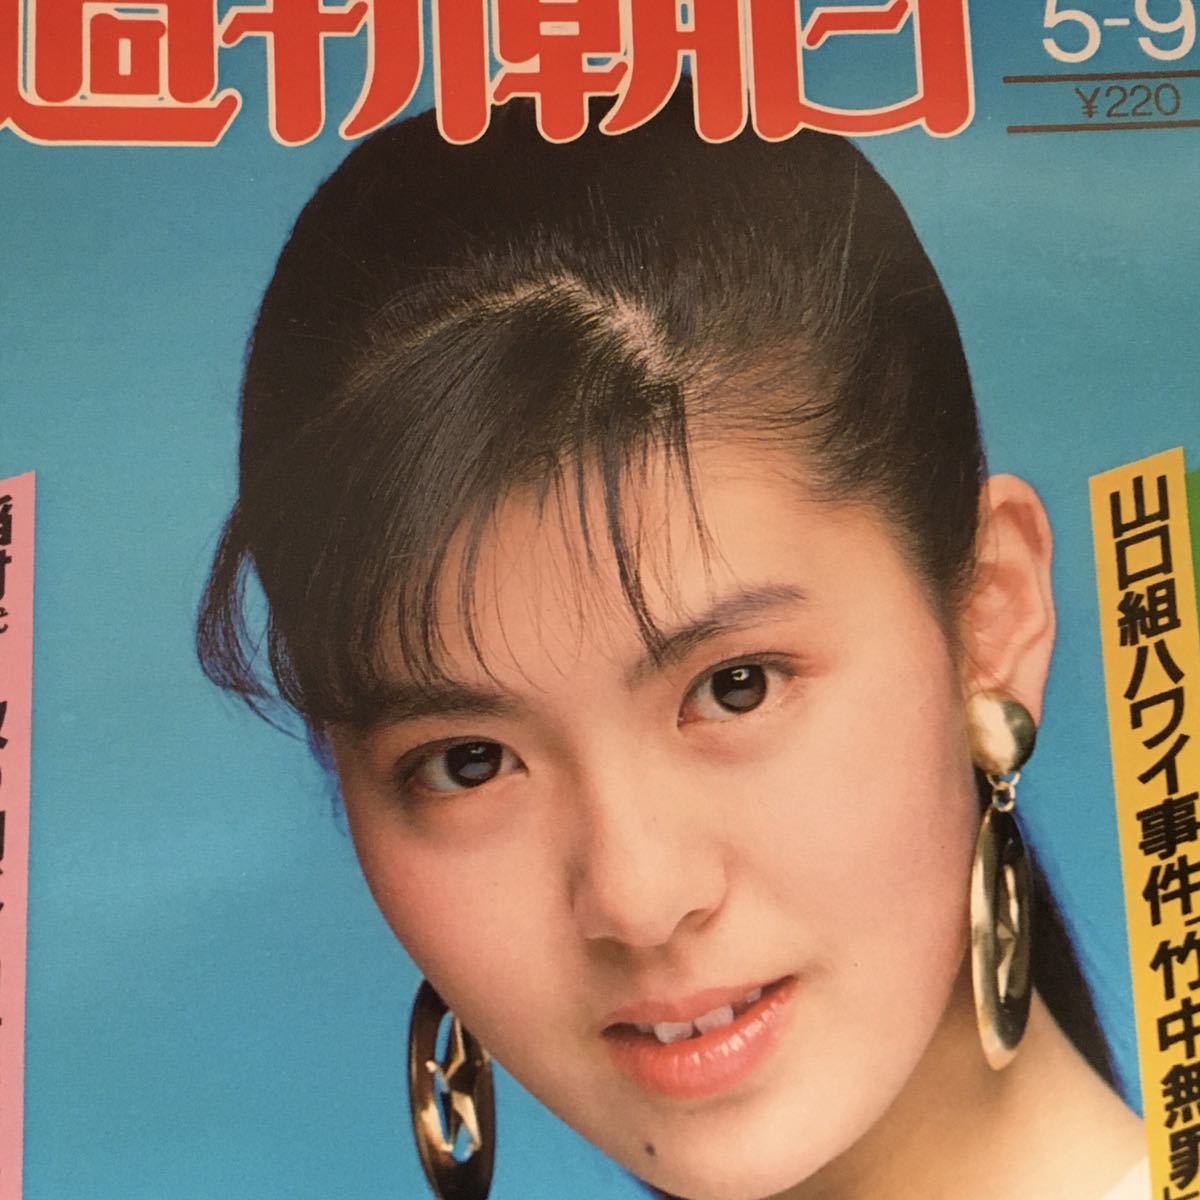  beautiful goods Weekly Asahi Minamino Yoko Terayama Shuuji Ishihara Mariko Showa Retro Showa era idol 